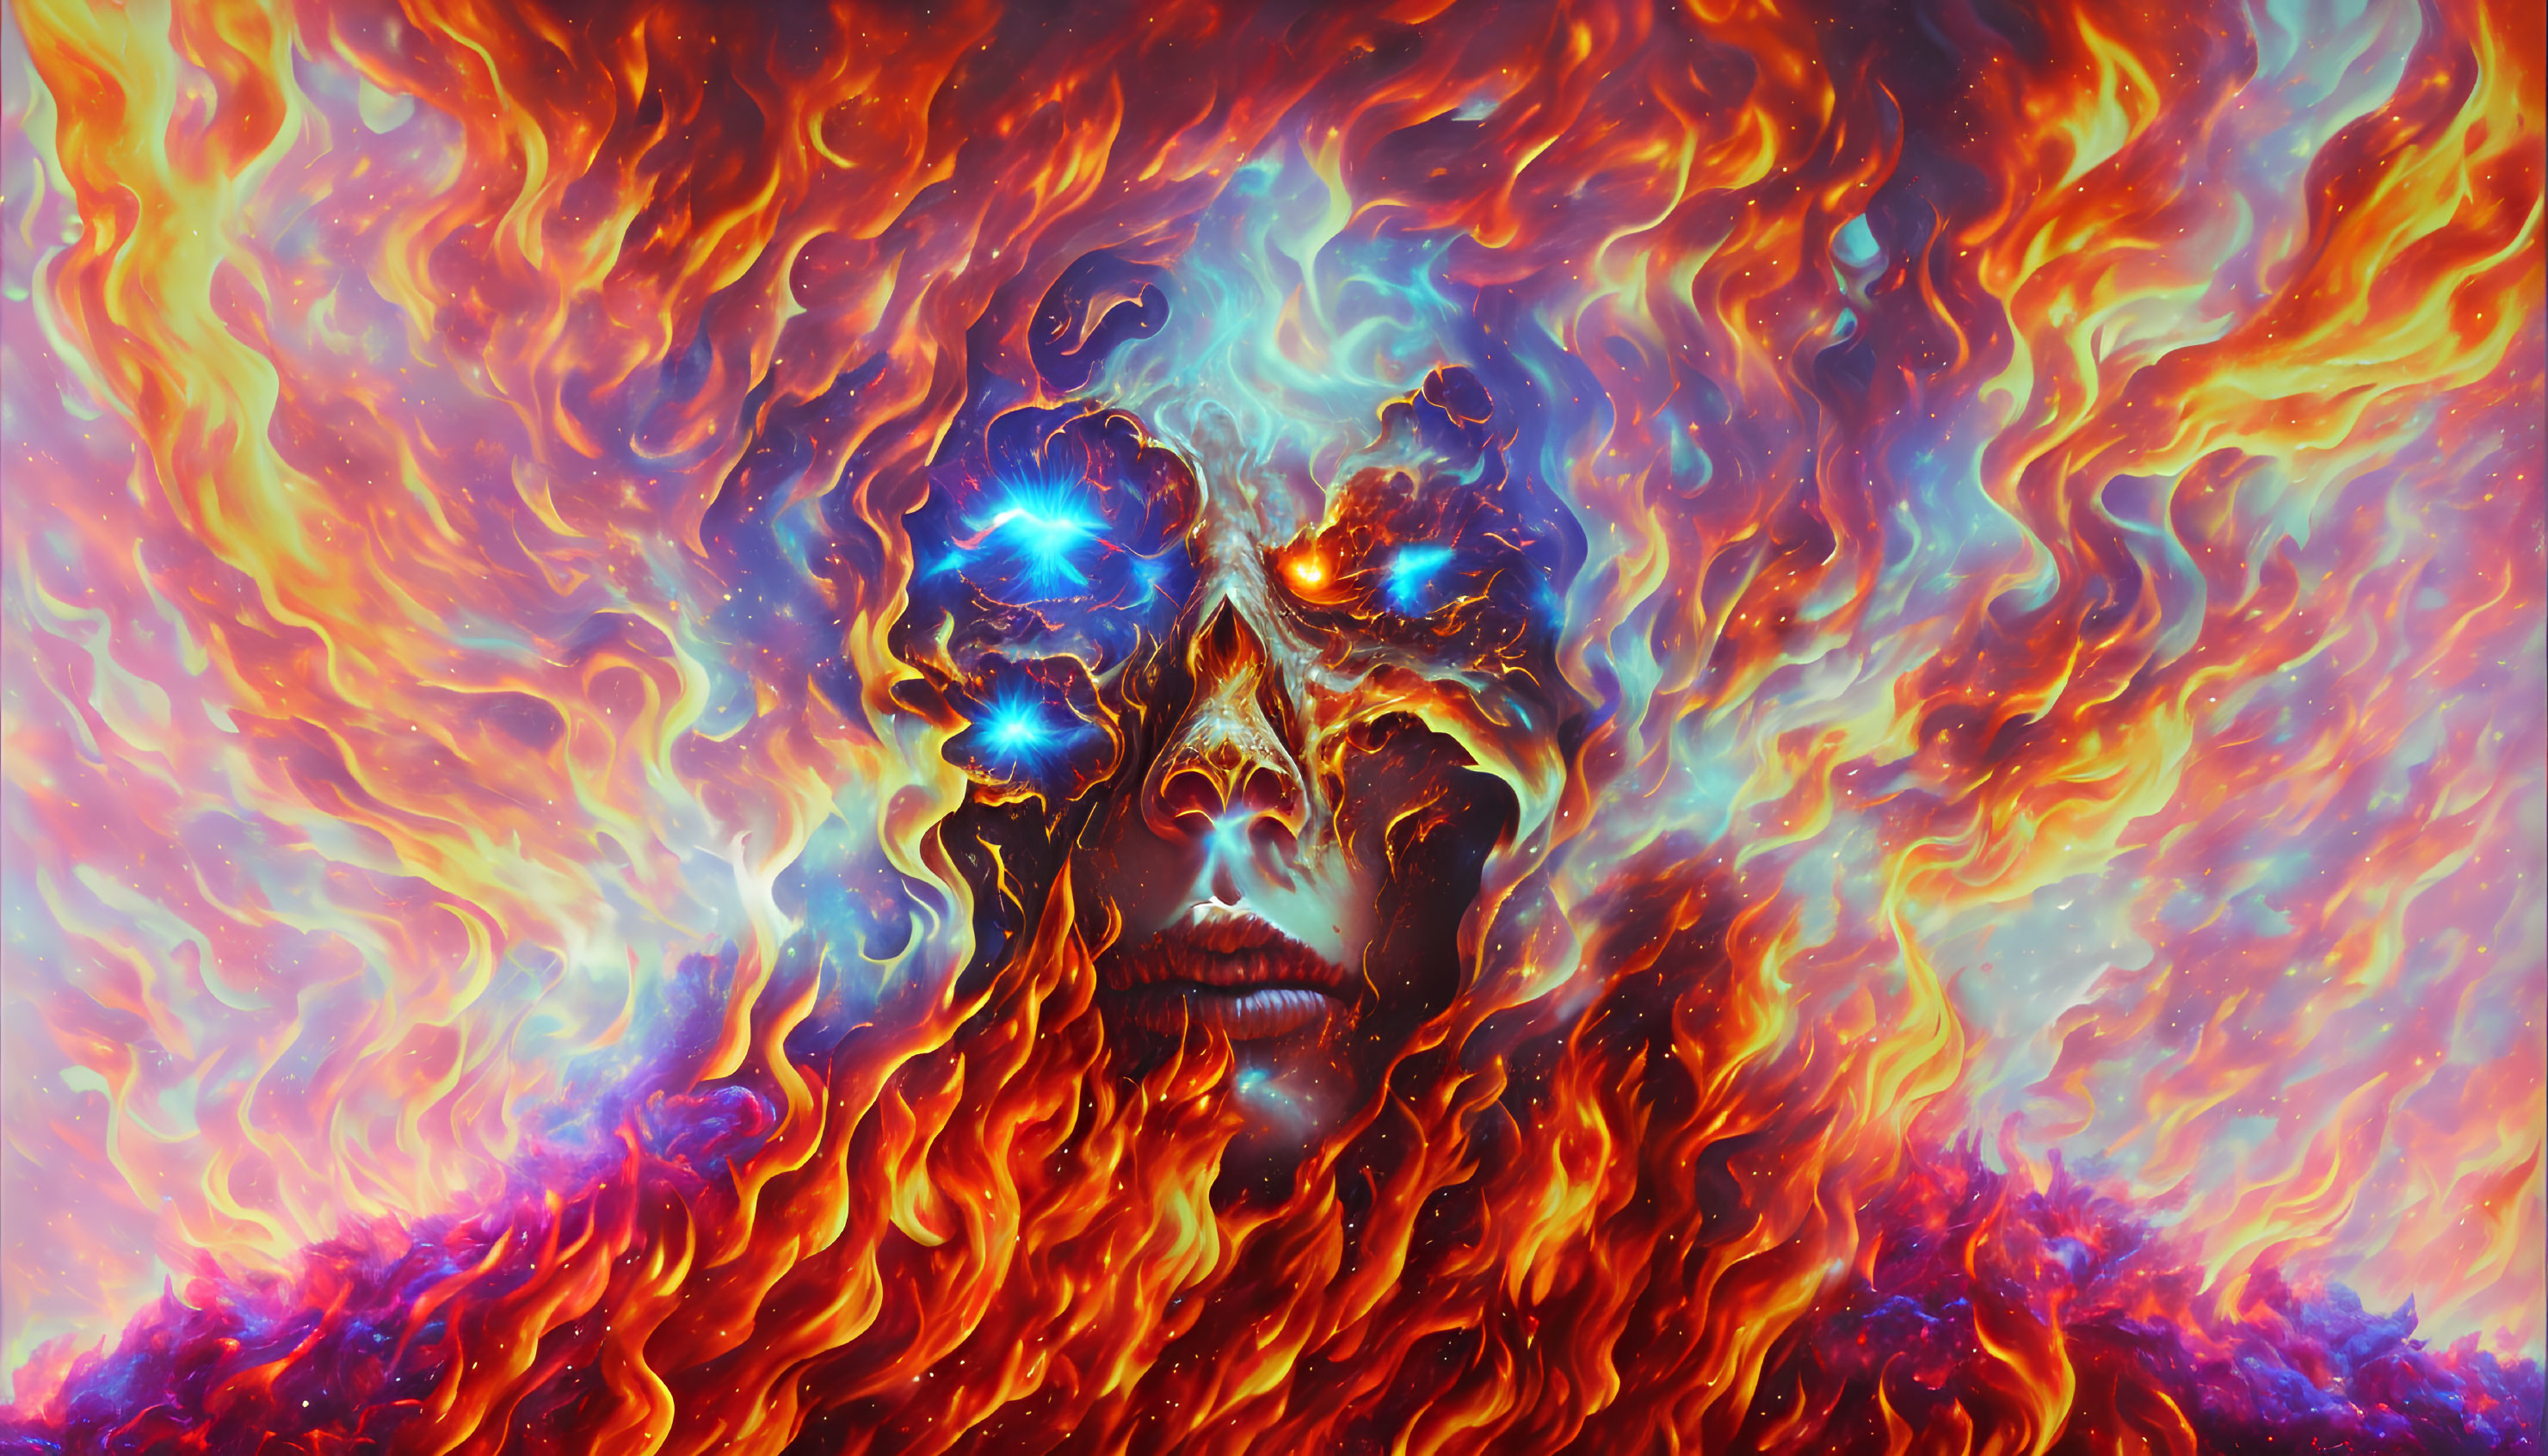 Digital artwork: Face in flames with cosmic eyes